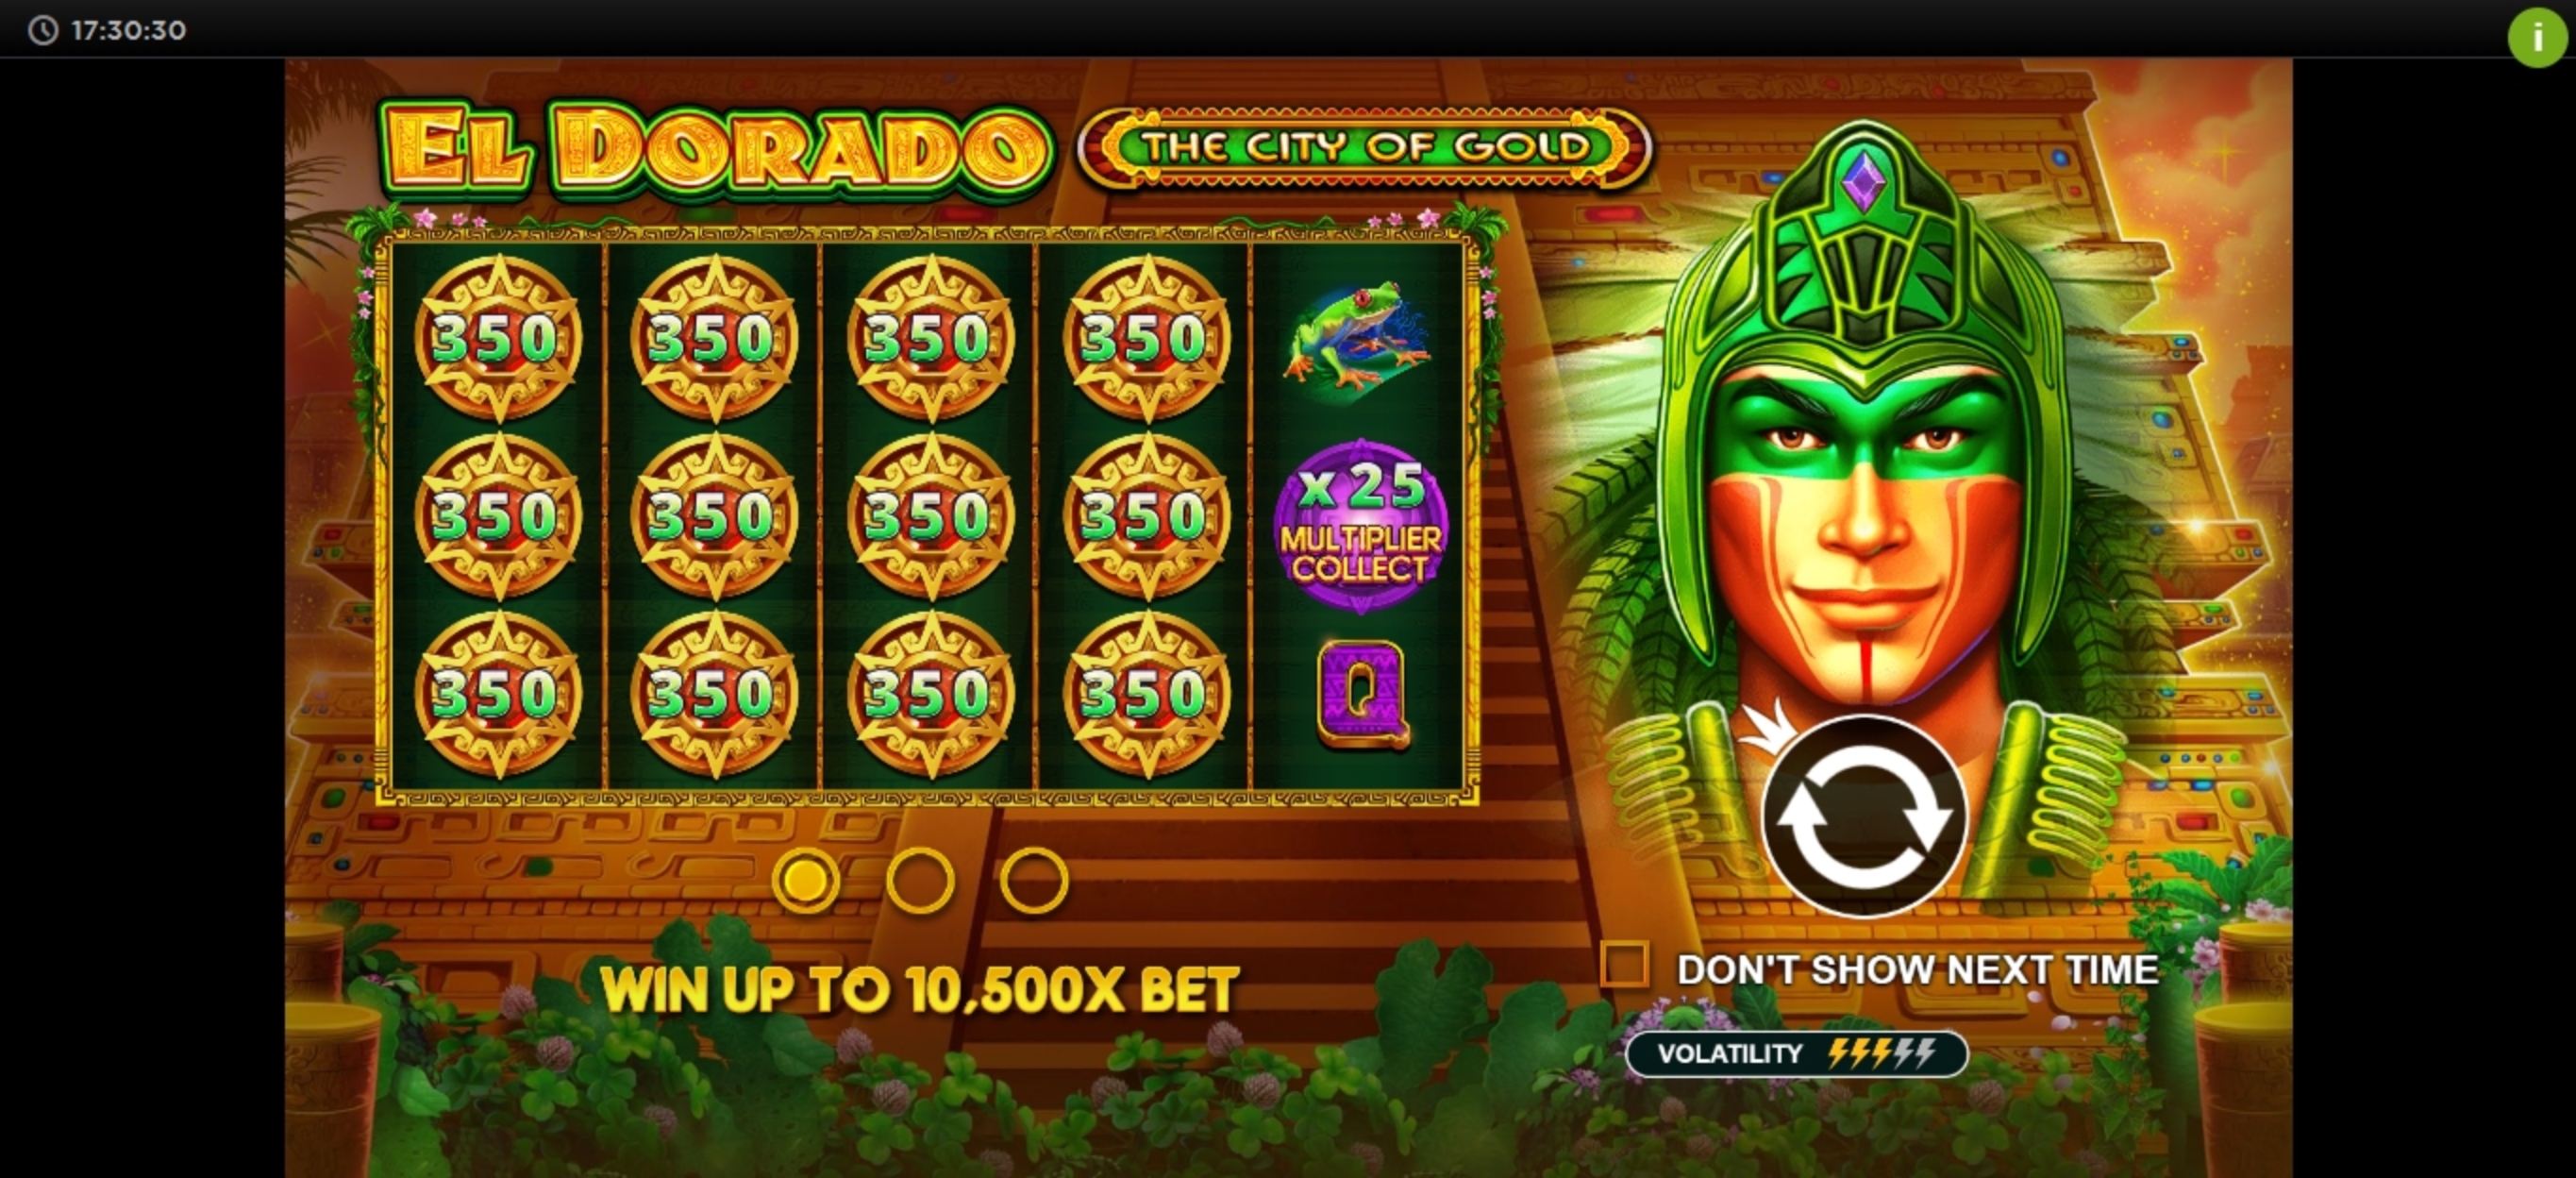 Play El Dorado The City of Gold Free Casino Slot Game by Pragmatic Play